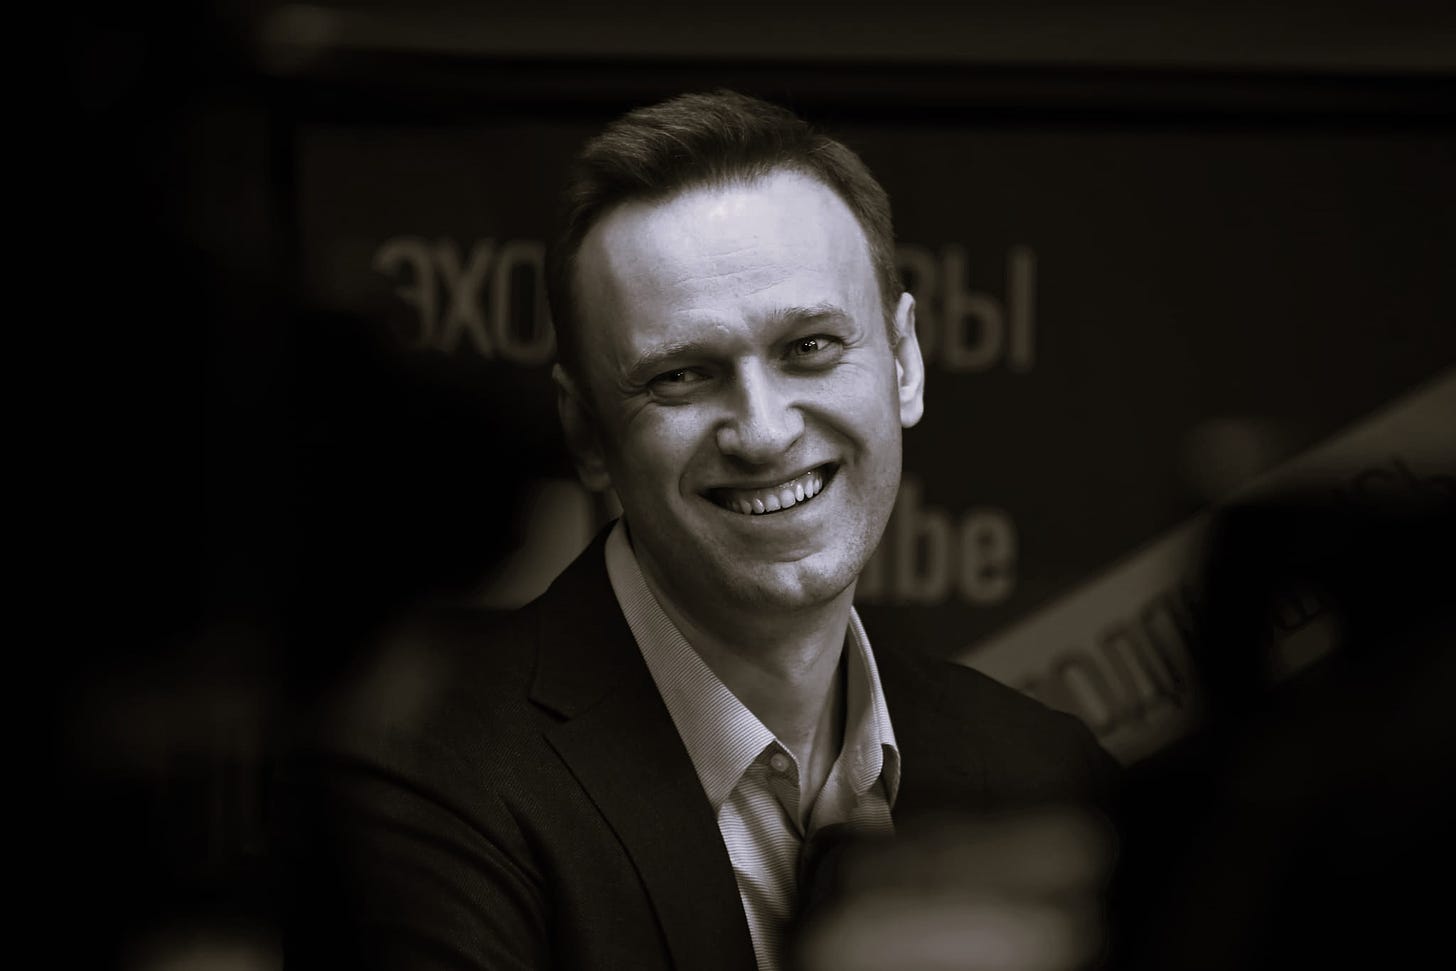 Photo Credit: Алексей Навальный - Official Facebook Page